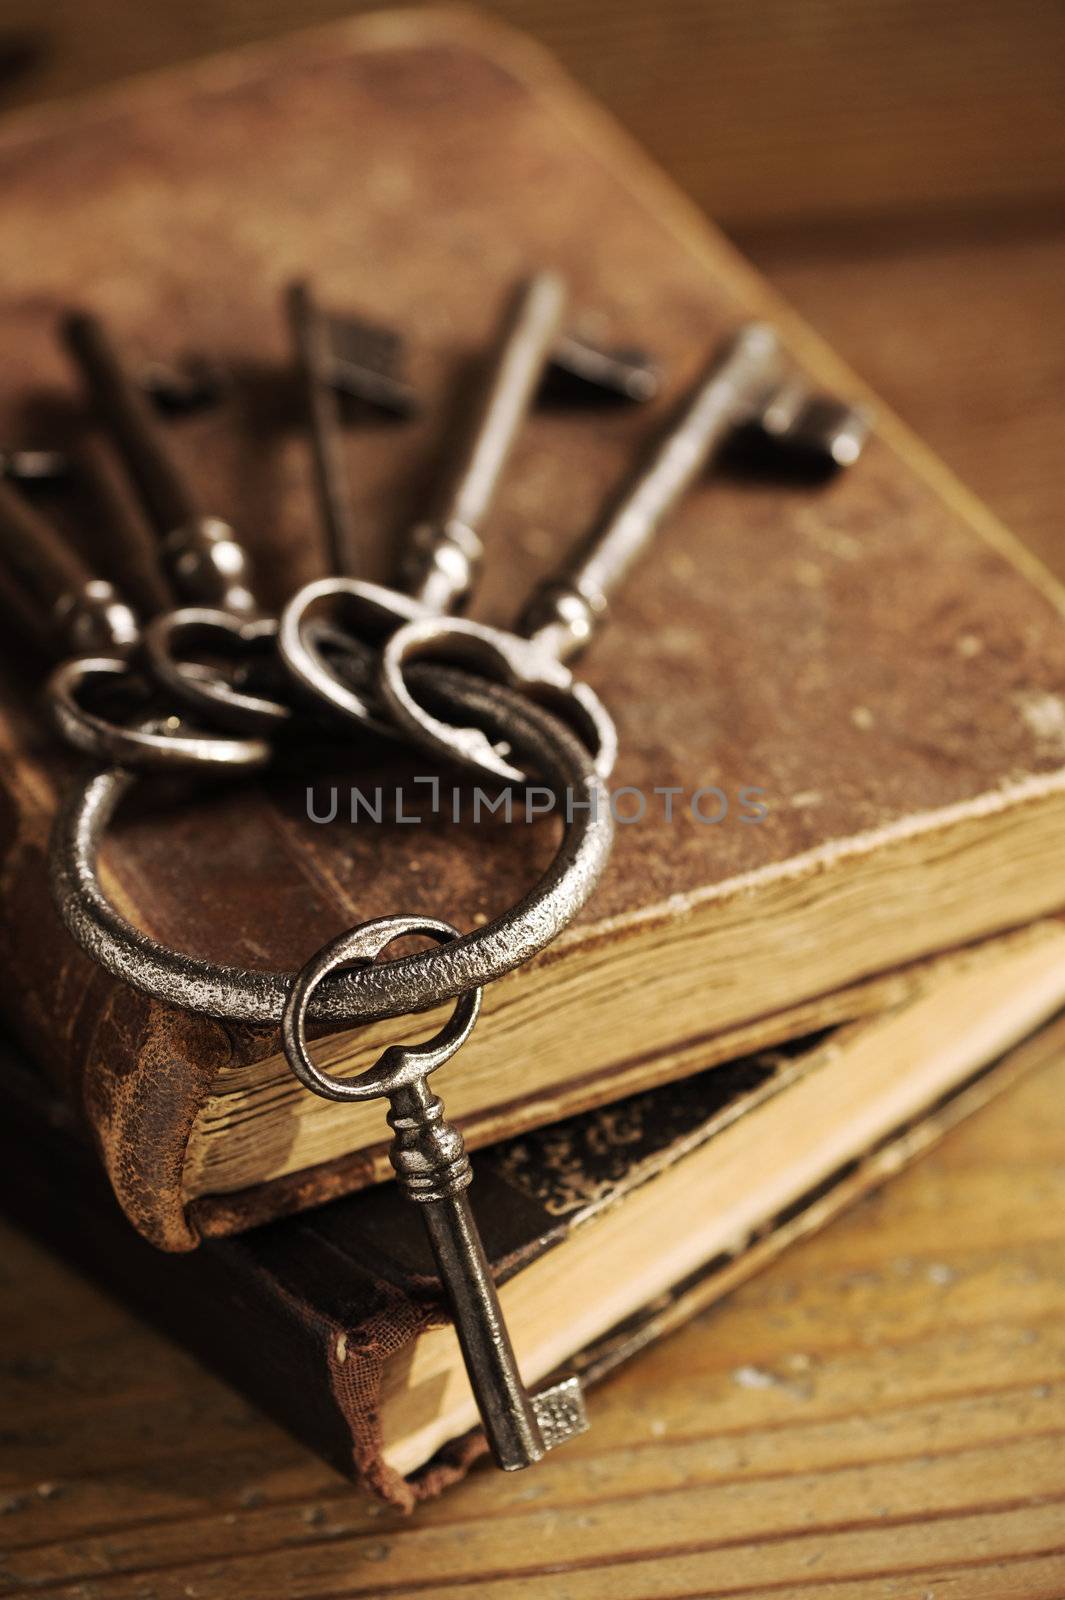 old keys on a old book, antique wood background